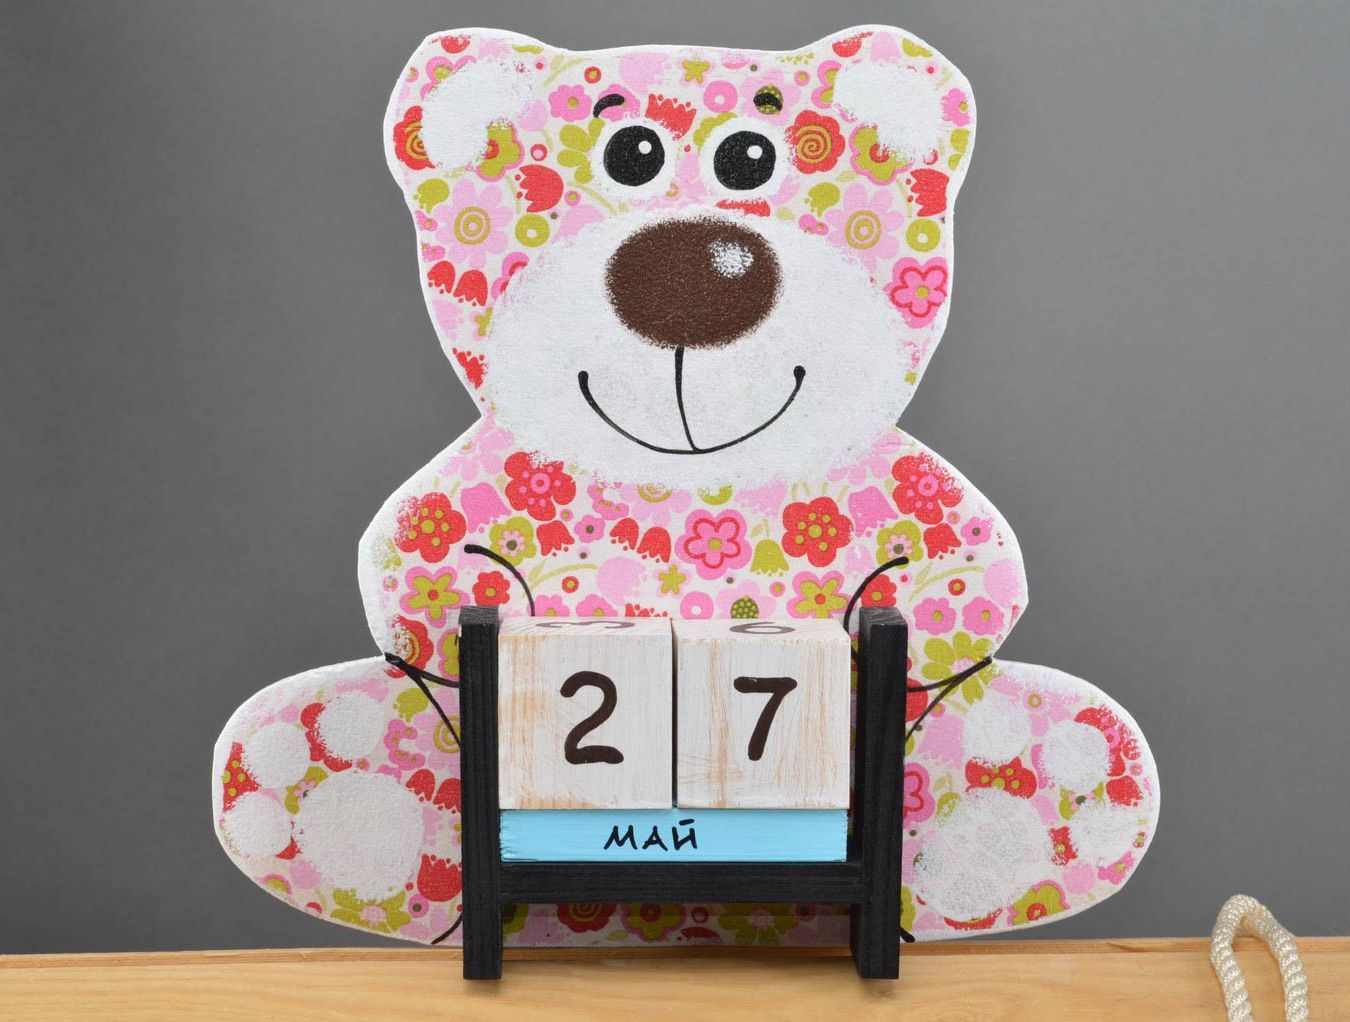 Hübscher Holz Tischkalender Bär für Kinder Decoupage handgeschaffen grell toll foto 2